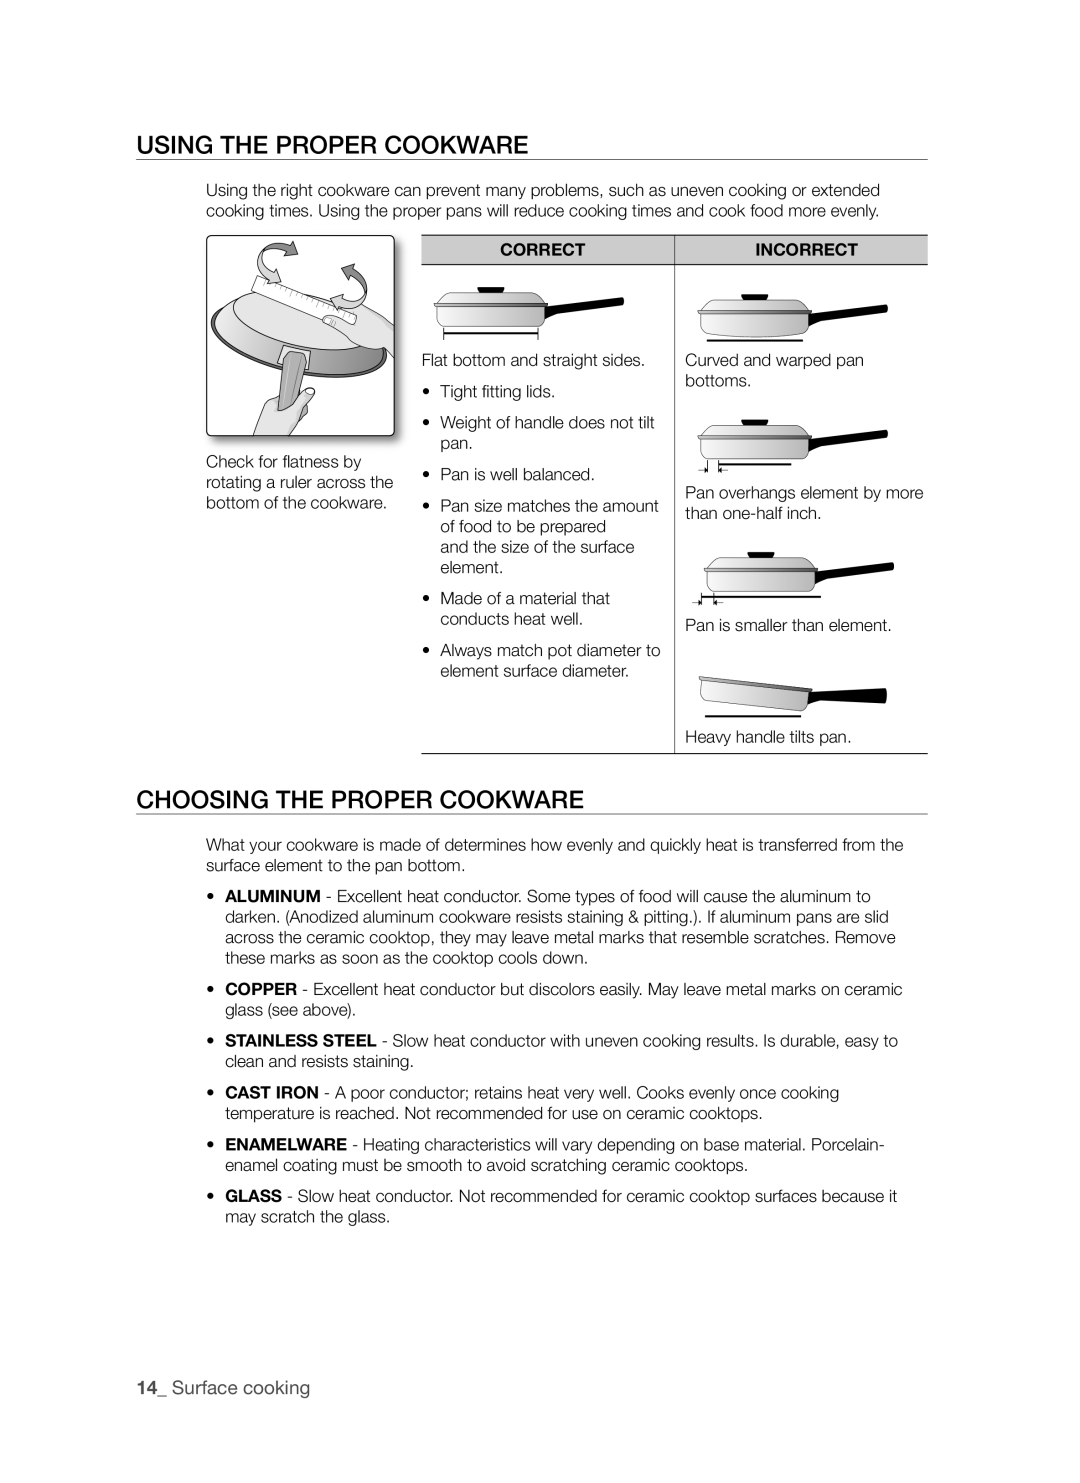 Samsung FTQ353 user manual Using The Proper Cookware, Choosing The Proper Cookware, 1 Surface cooking 